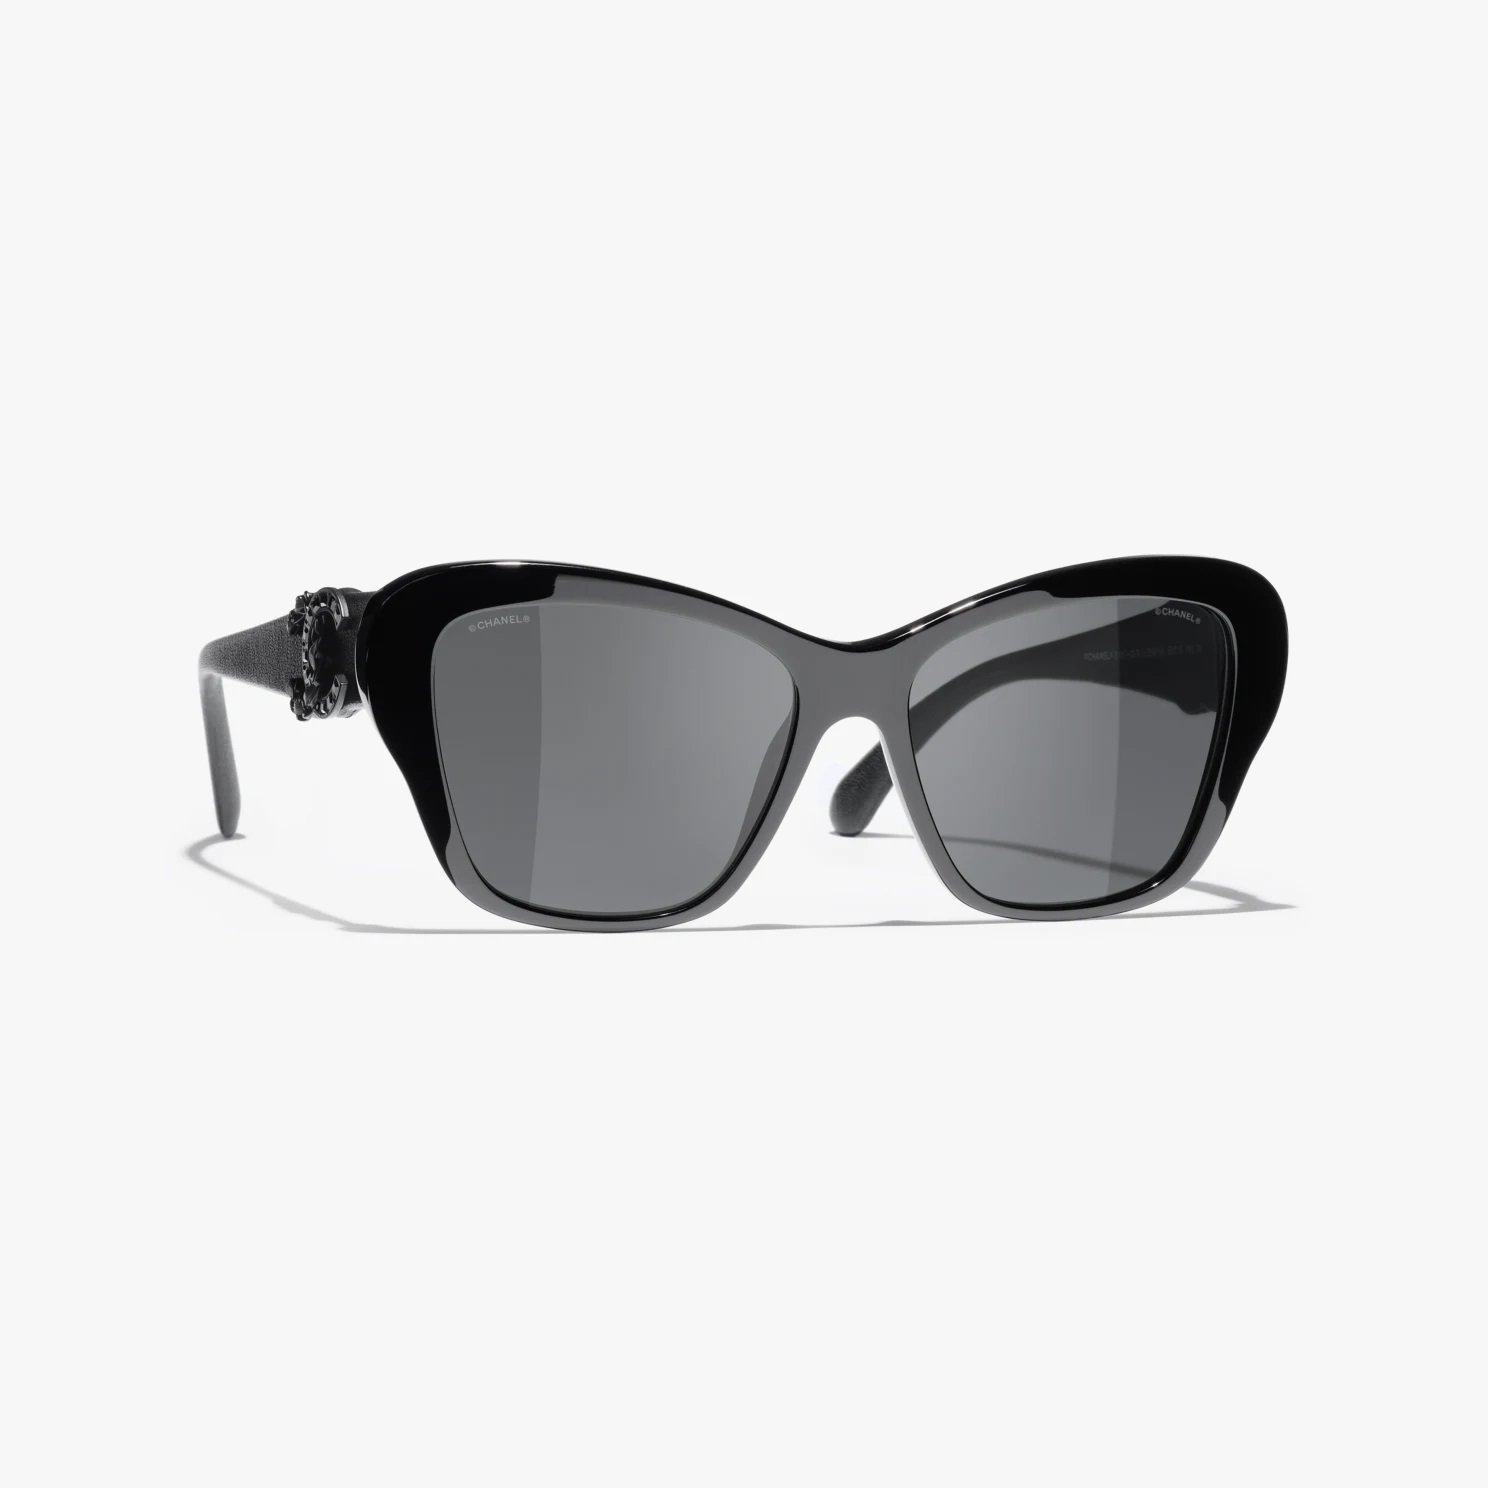 Chanel Butterfly Acetate Sunglasses in Black.jpg